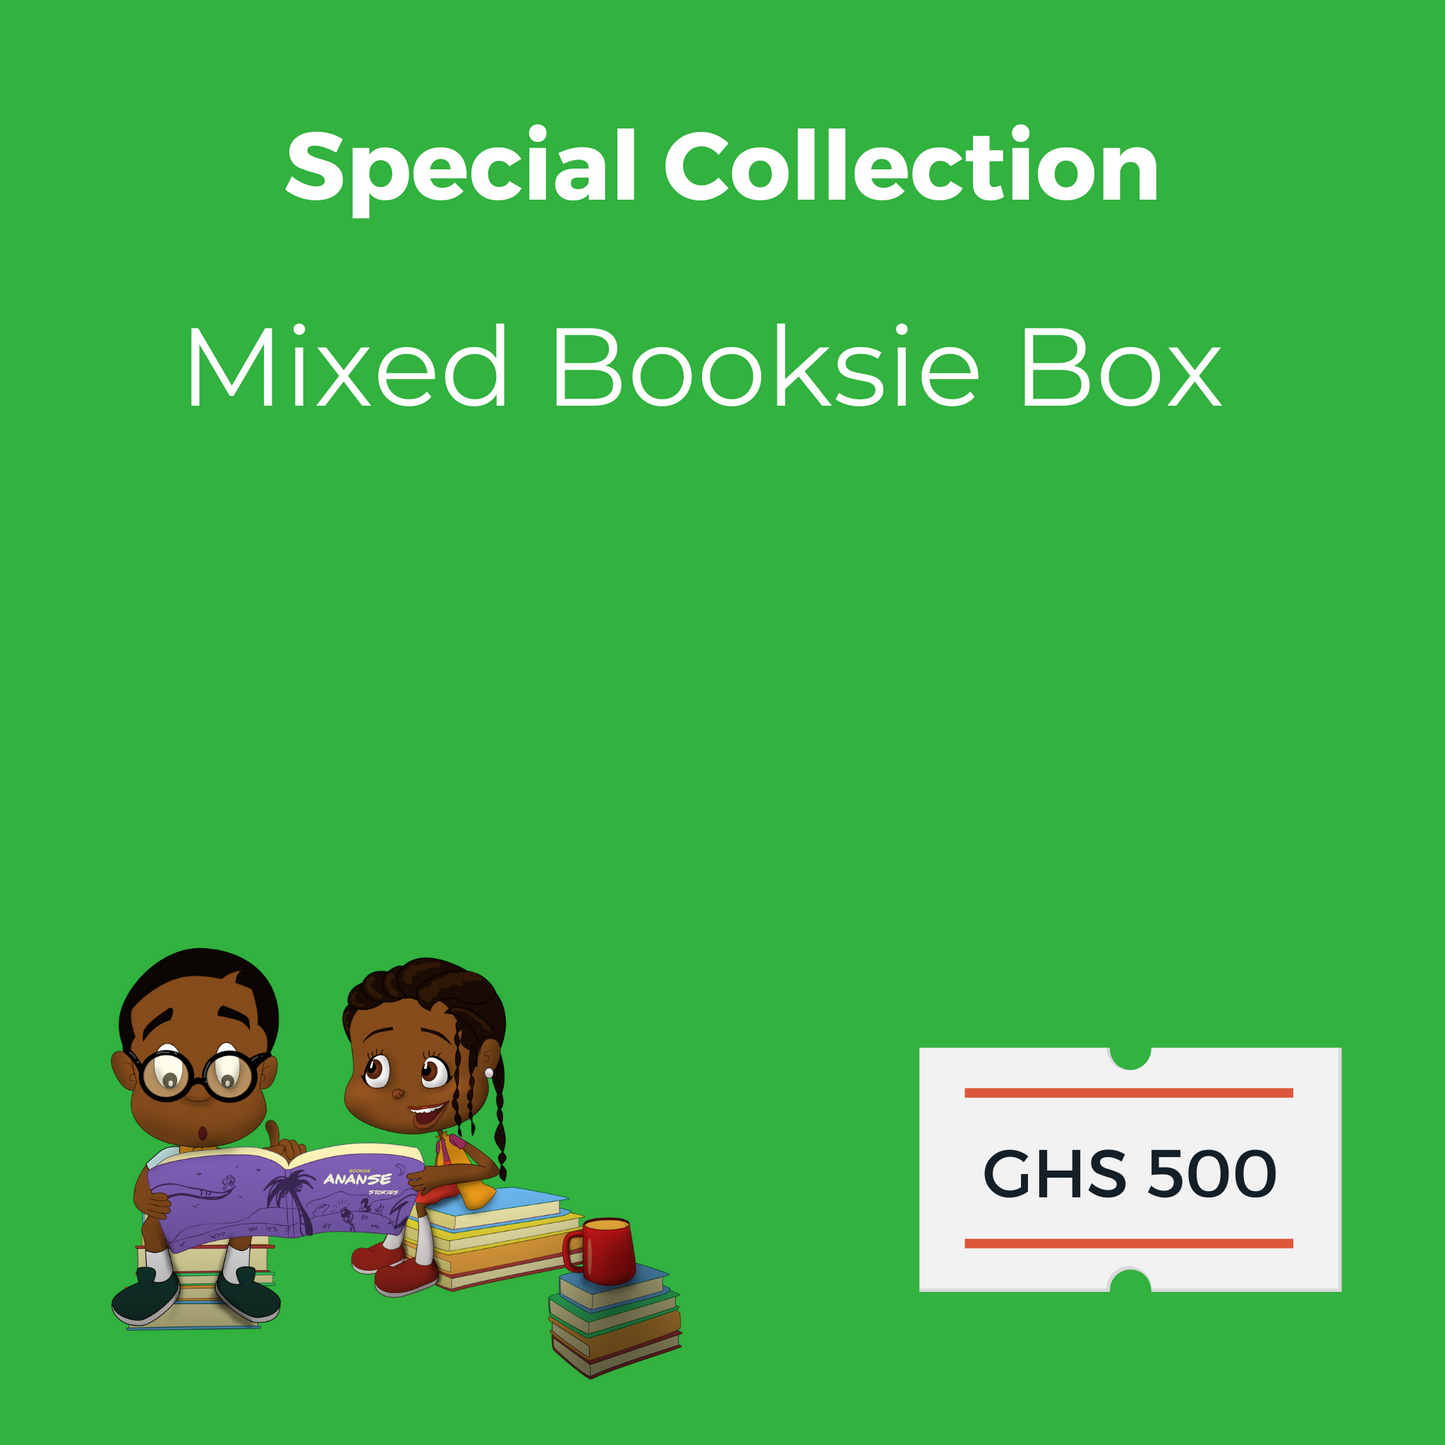 Mixed Booksie Box